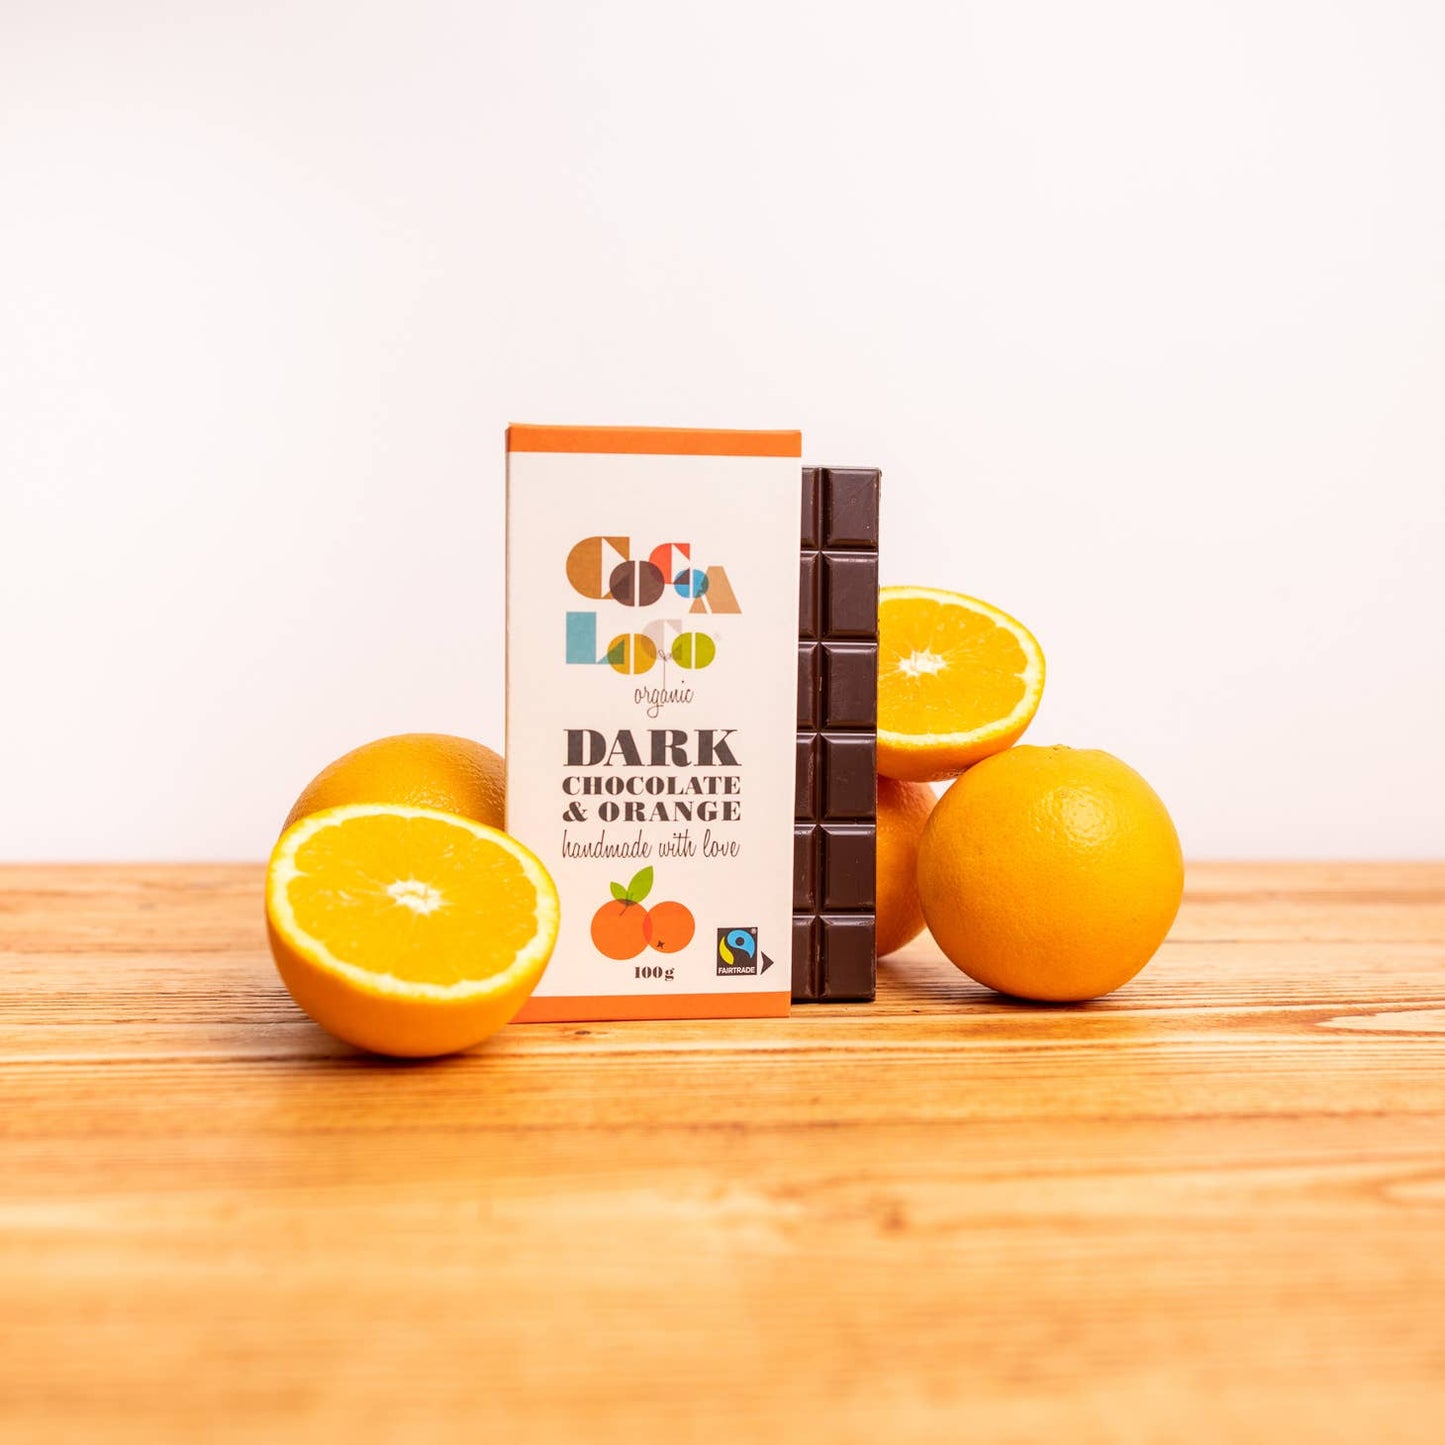 Dark Chocolate & Orange Chocolate Bar